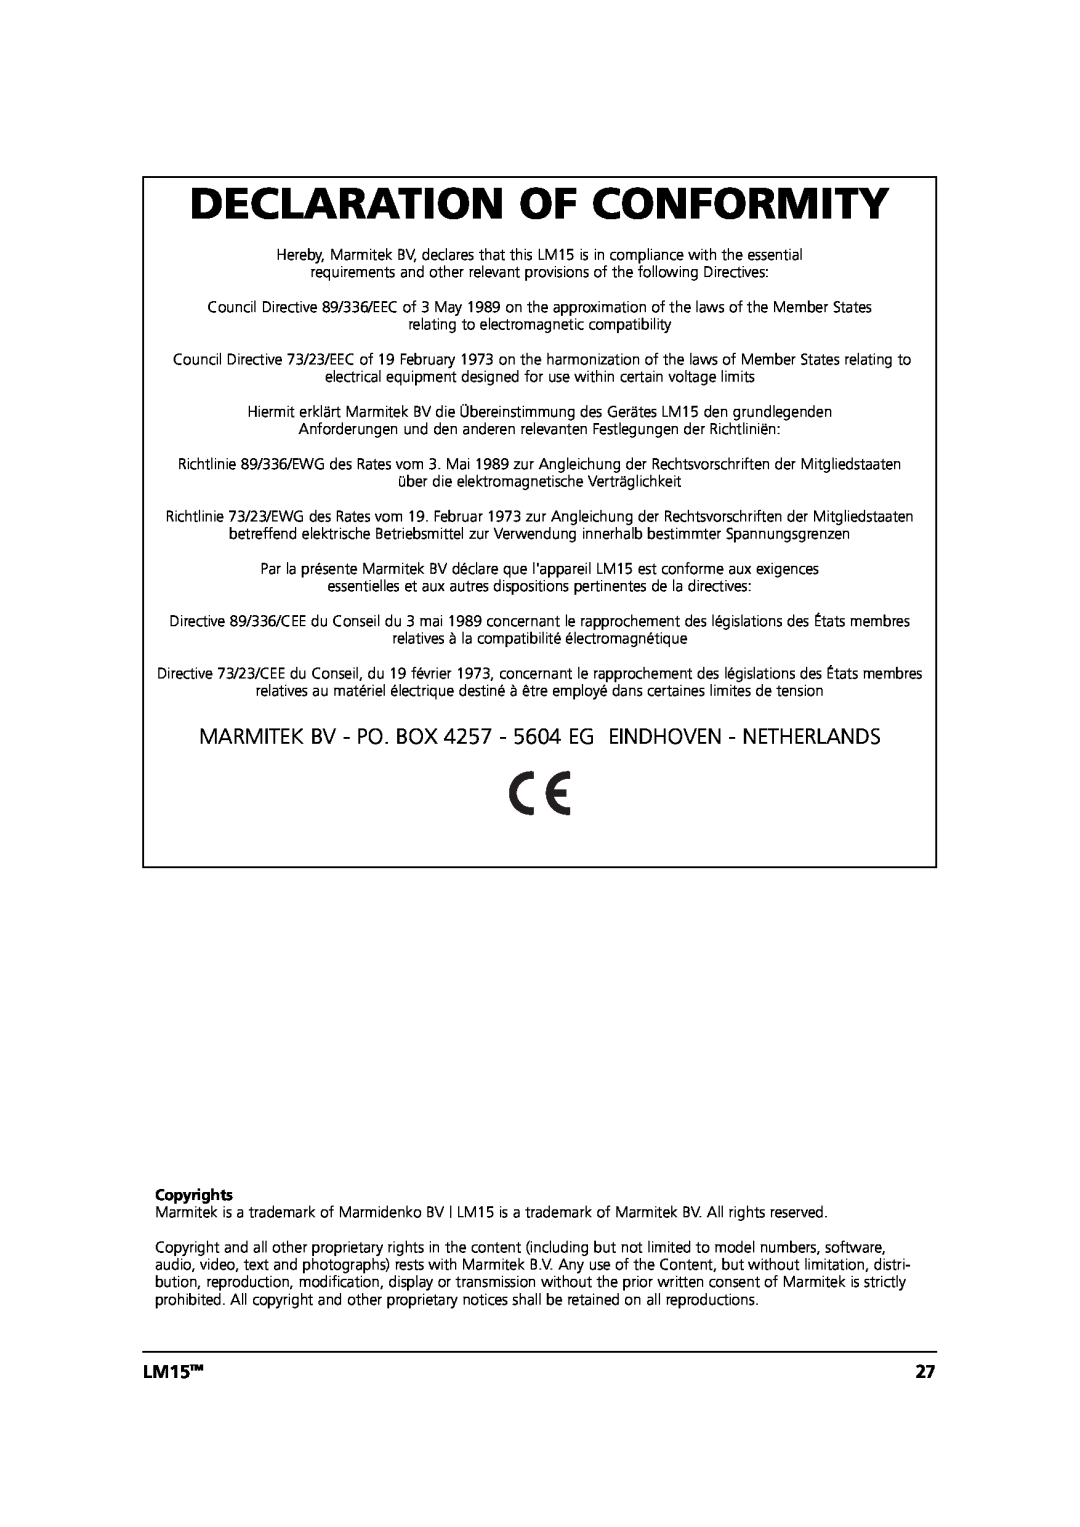 Marmitek user manual Declaration Of Conformity, LM15TM, Copyrights 